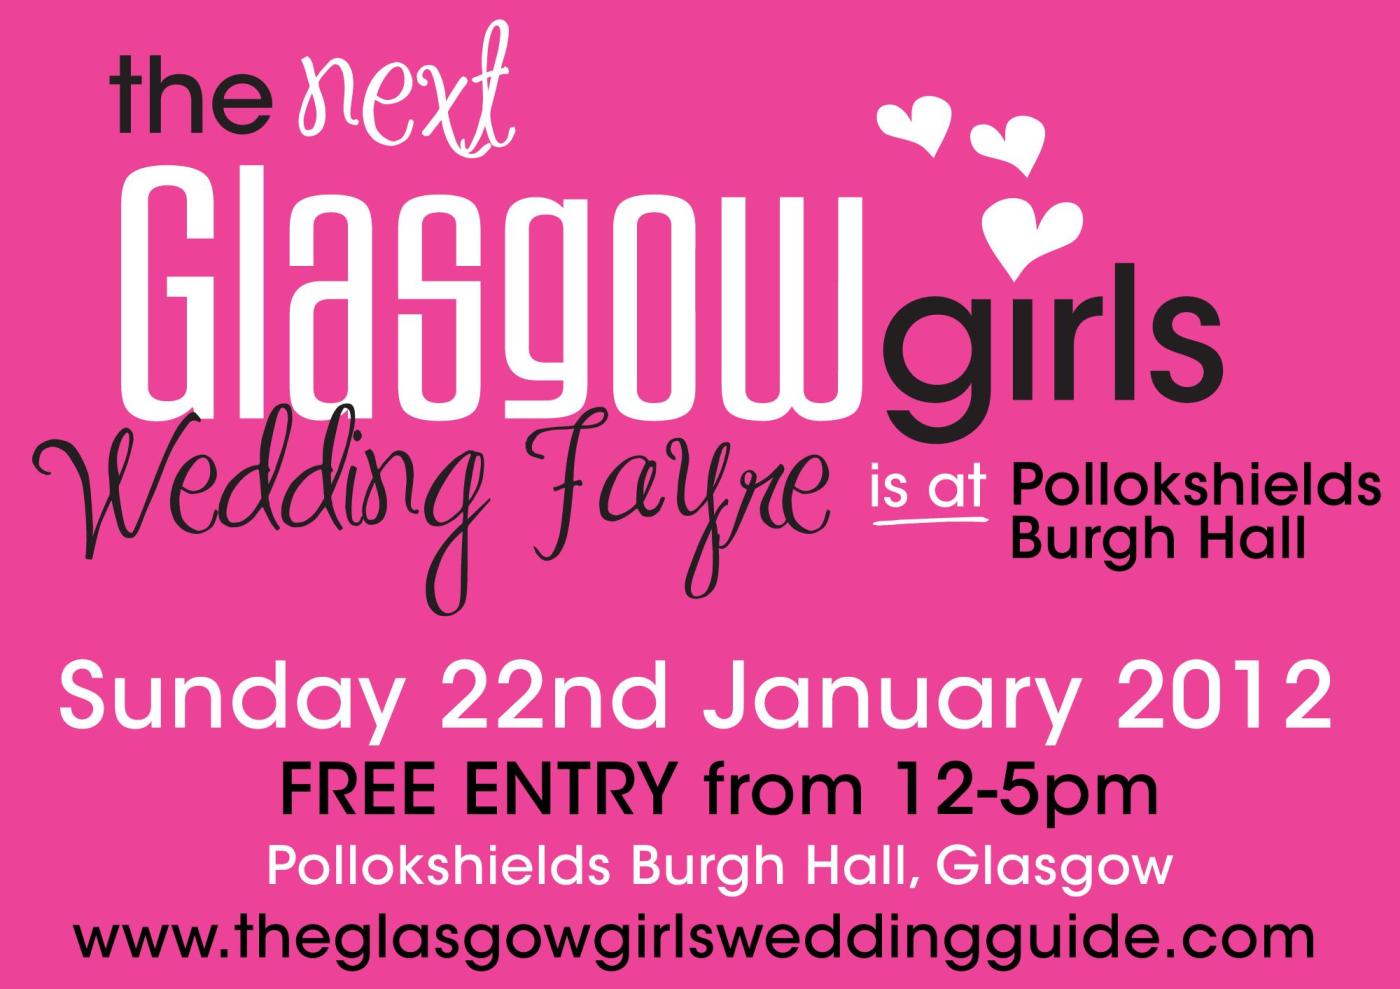 Glasgow Girls Wedding Fayre Flyer for 22nd January 2012